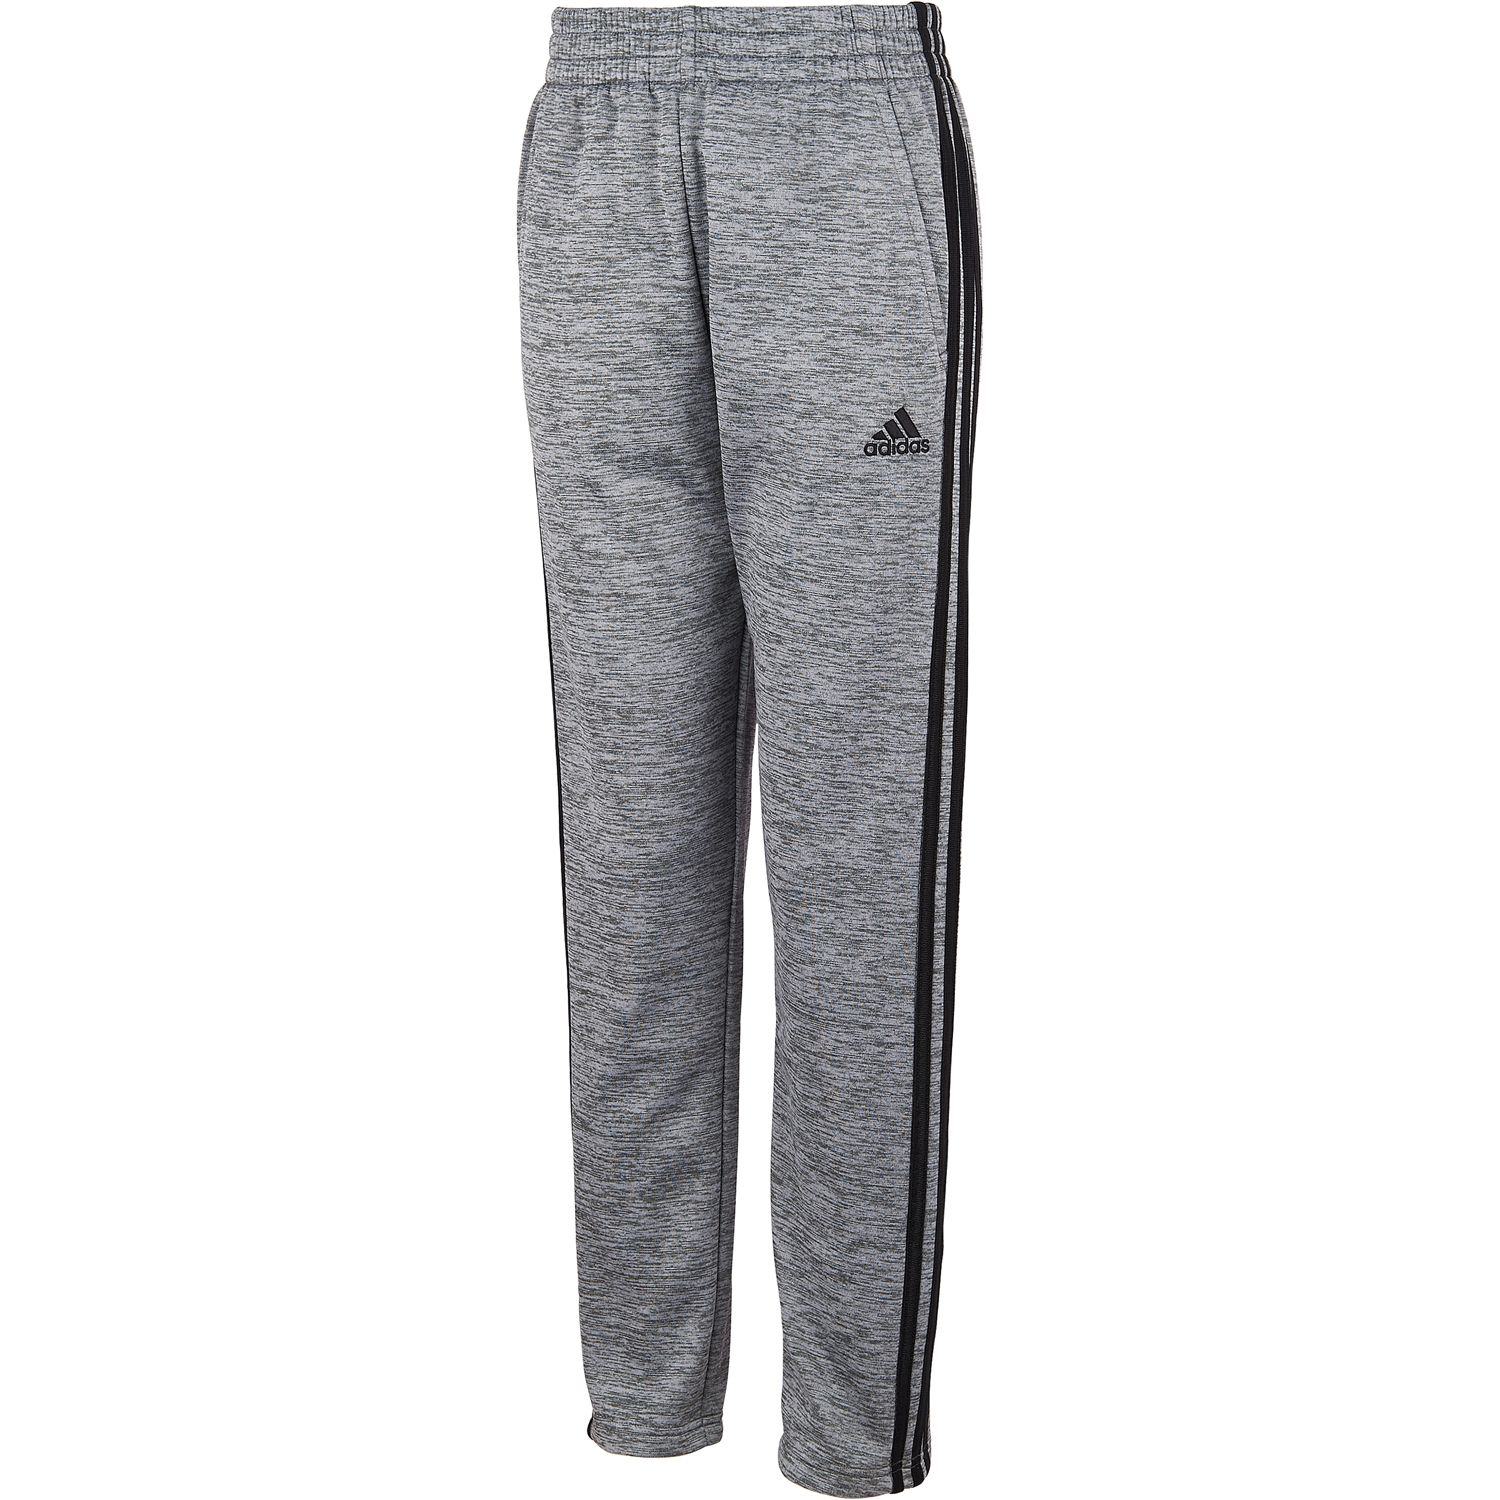 grey adidas sweatpants with black stripes